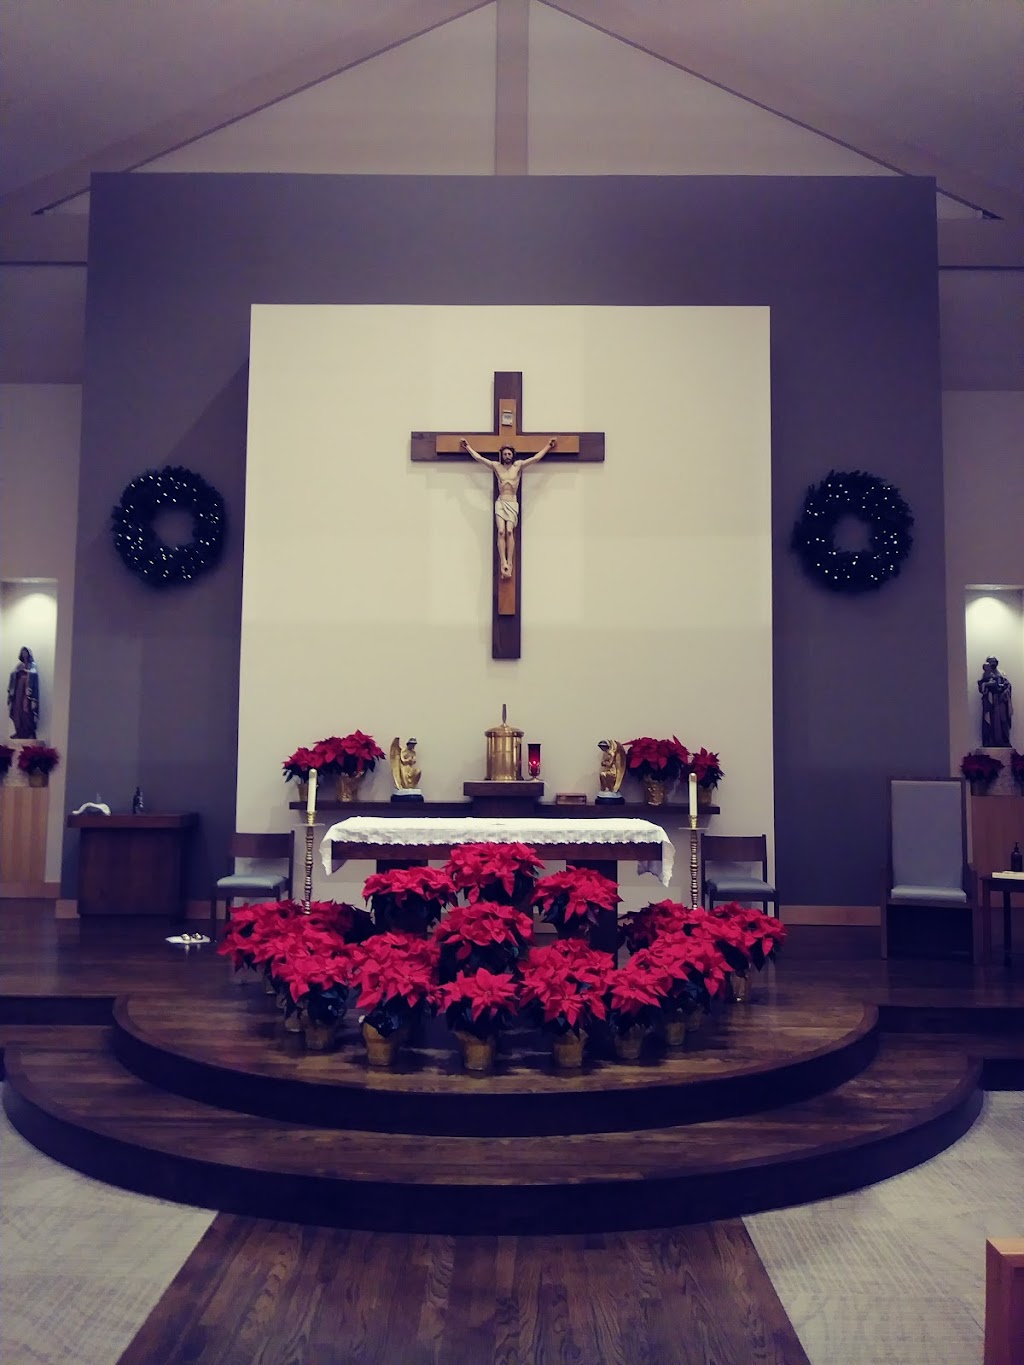 Catholic Church of the Nativity | 2793 Buckner Ln, Thompsons Station, TN 37179, USA | Phone: (615) 794-4004